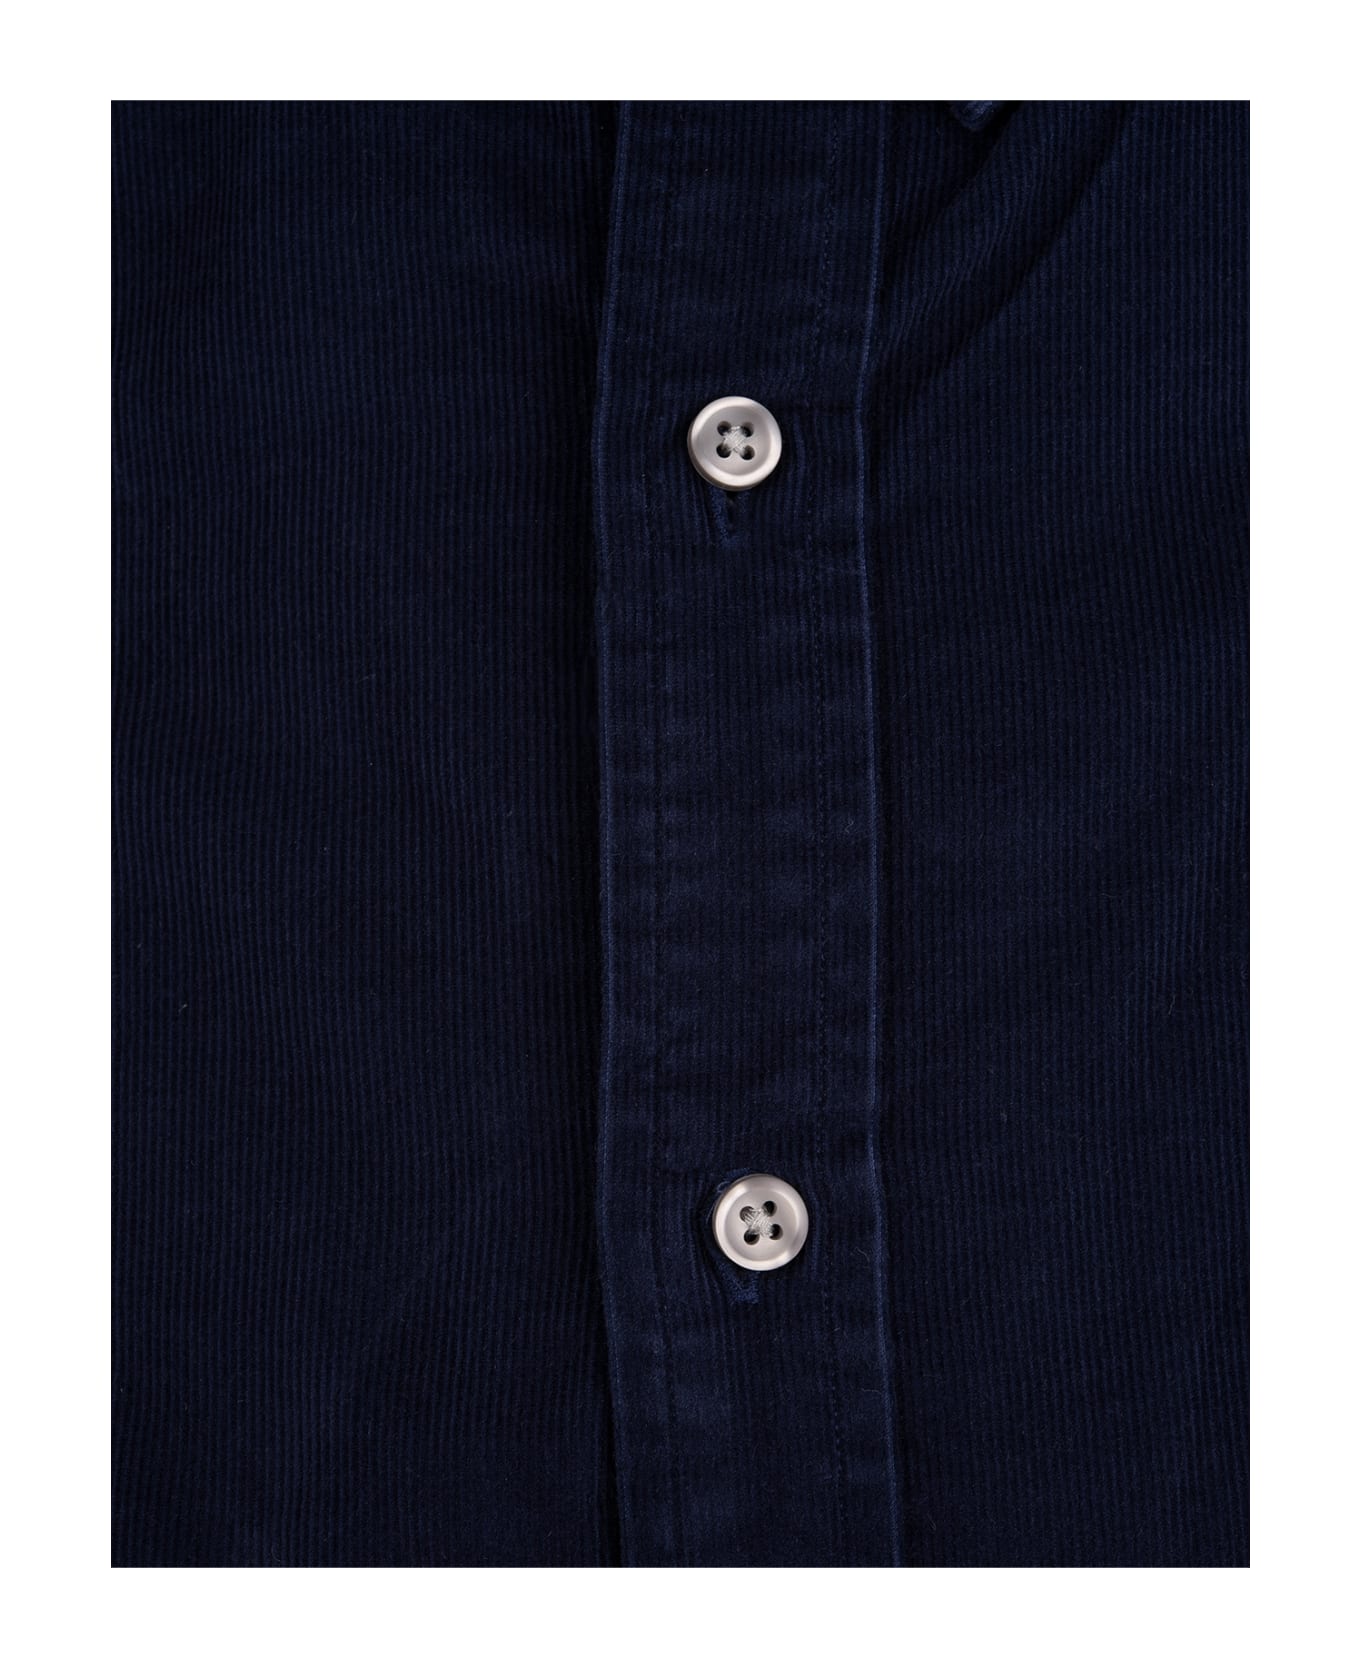 Ralph Lauren Man Slim Fit Shirt In Night Blue Fustian With Contrast Pony - Blu